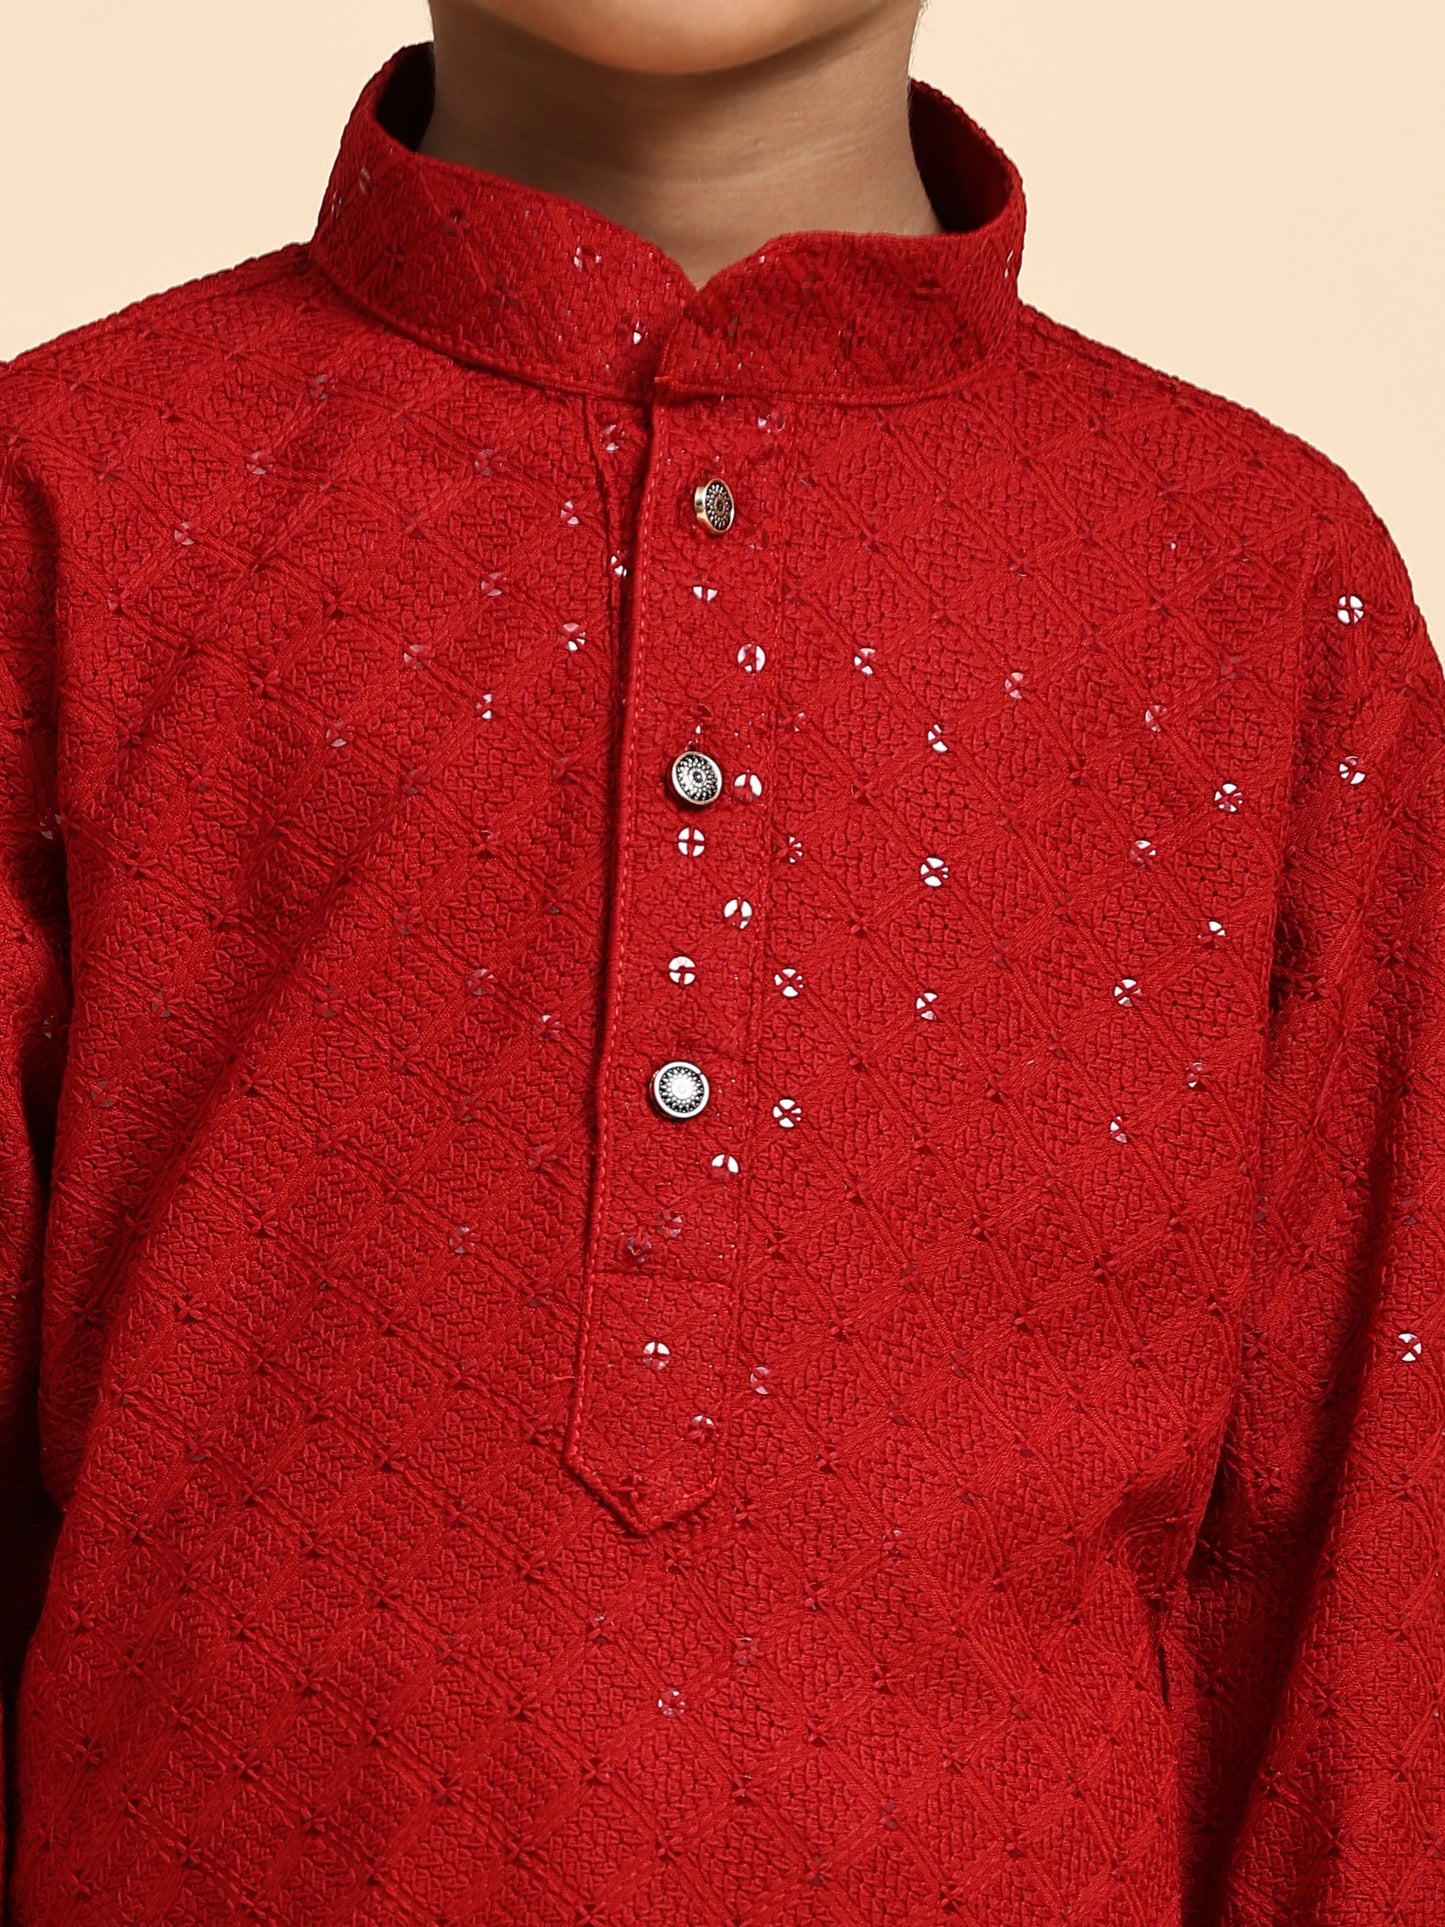 Pro-Ethic Style Developer Boys Cotton Kurta Pajama for Kid's Ethnic Wear | Cotton Kurta Pajama (S-227), Maroon